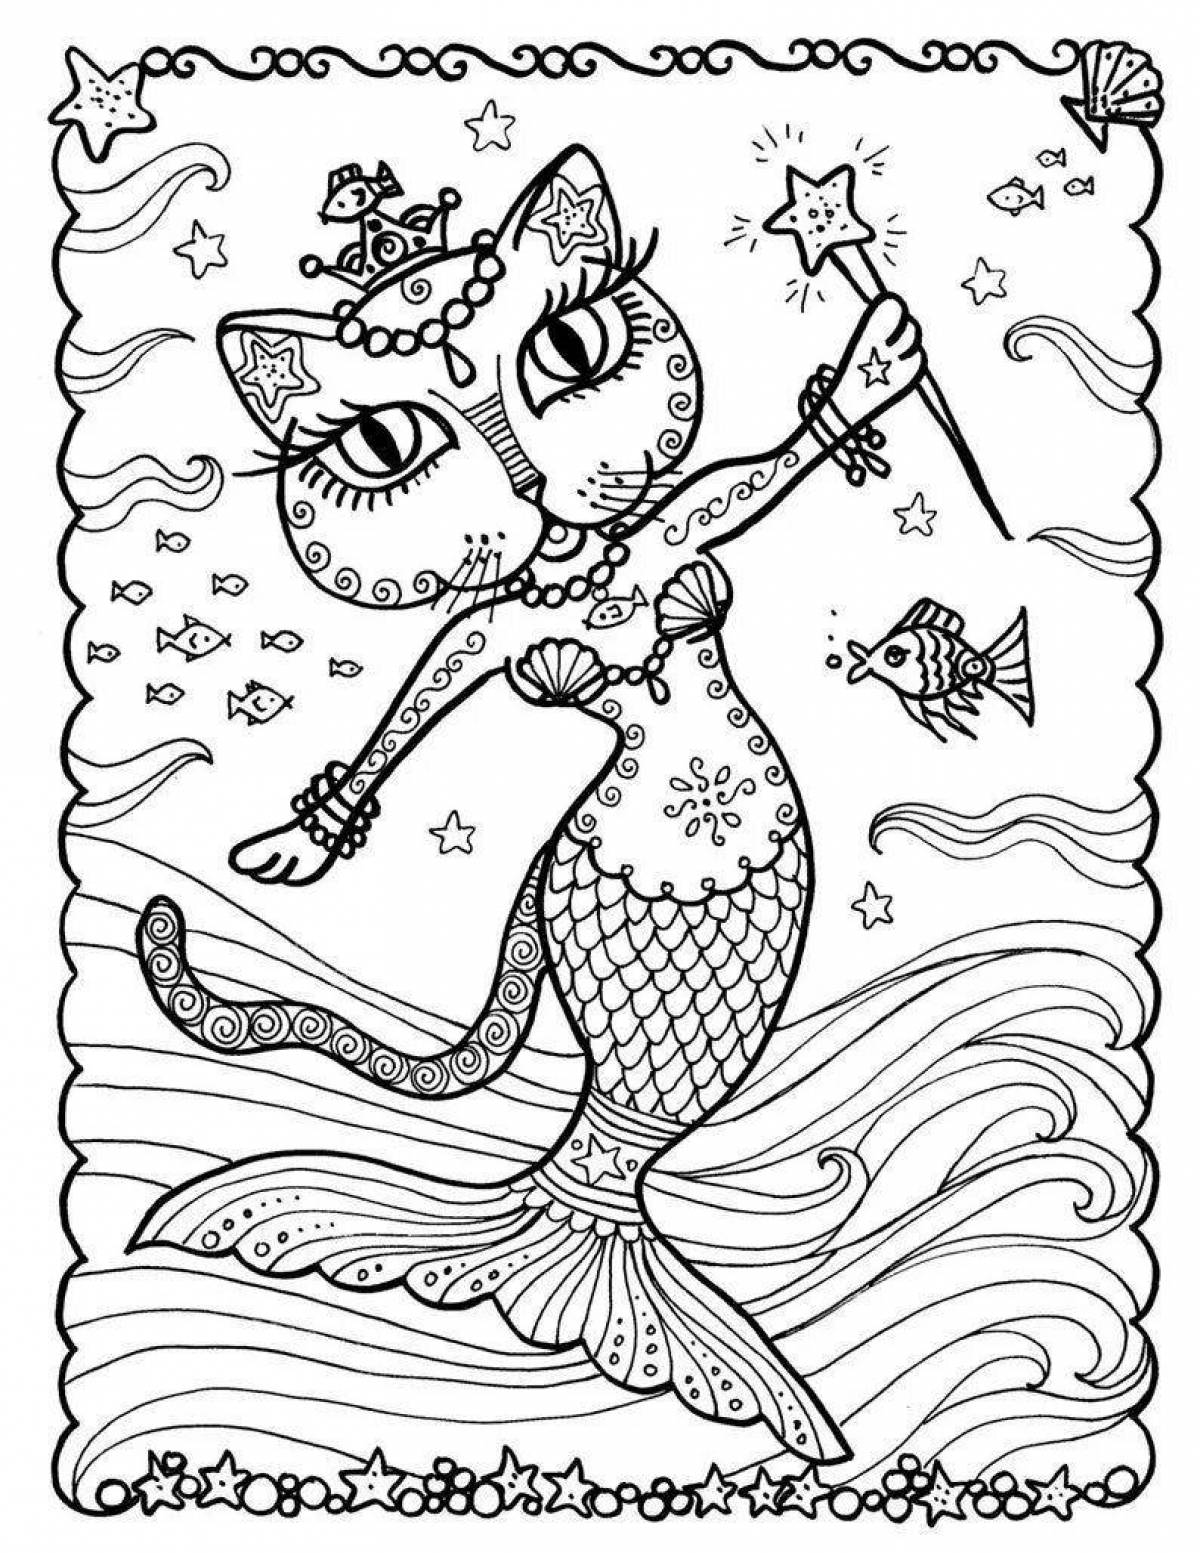 Hypnotic coloring cat mermaid